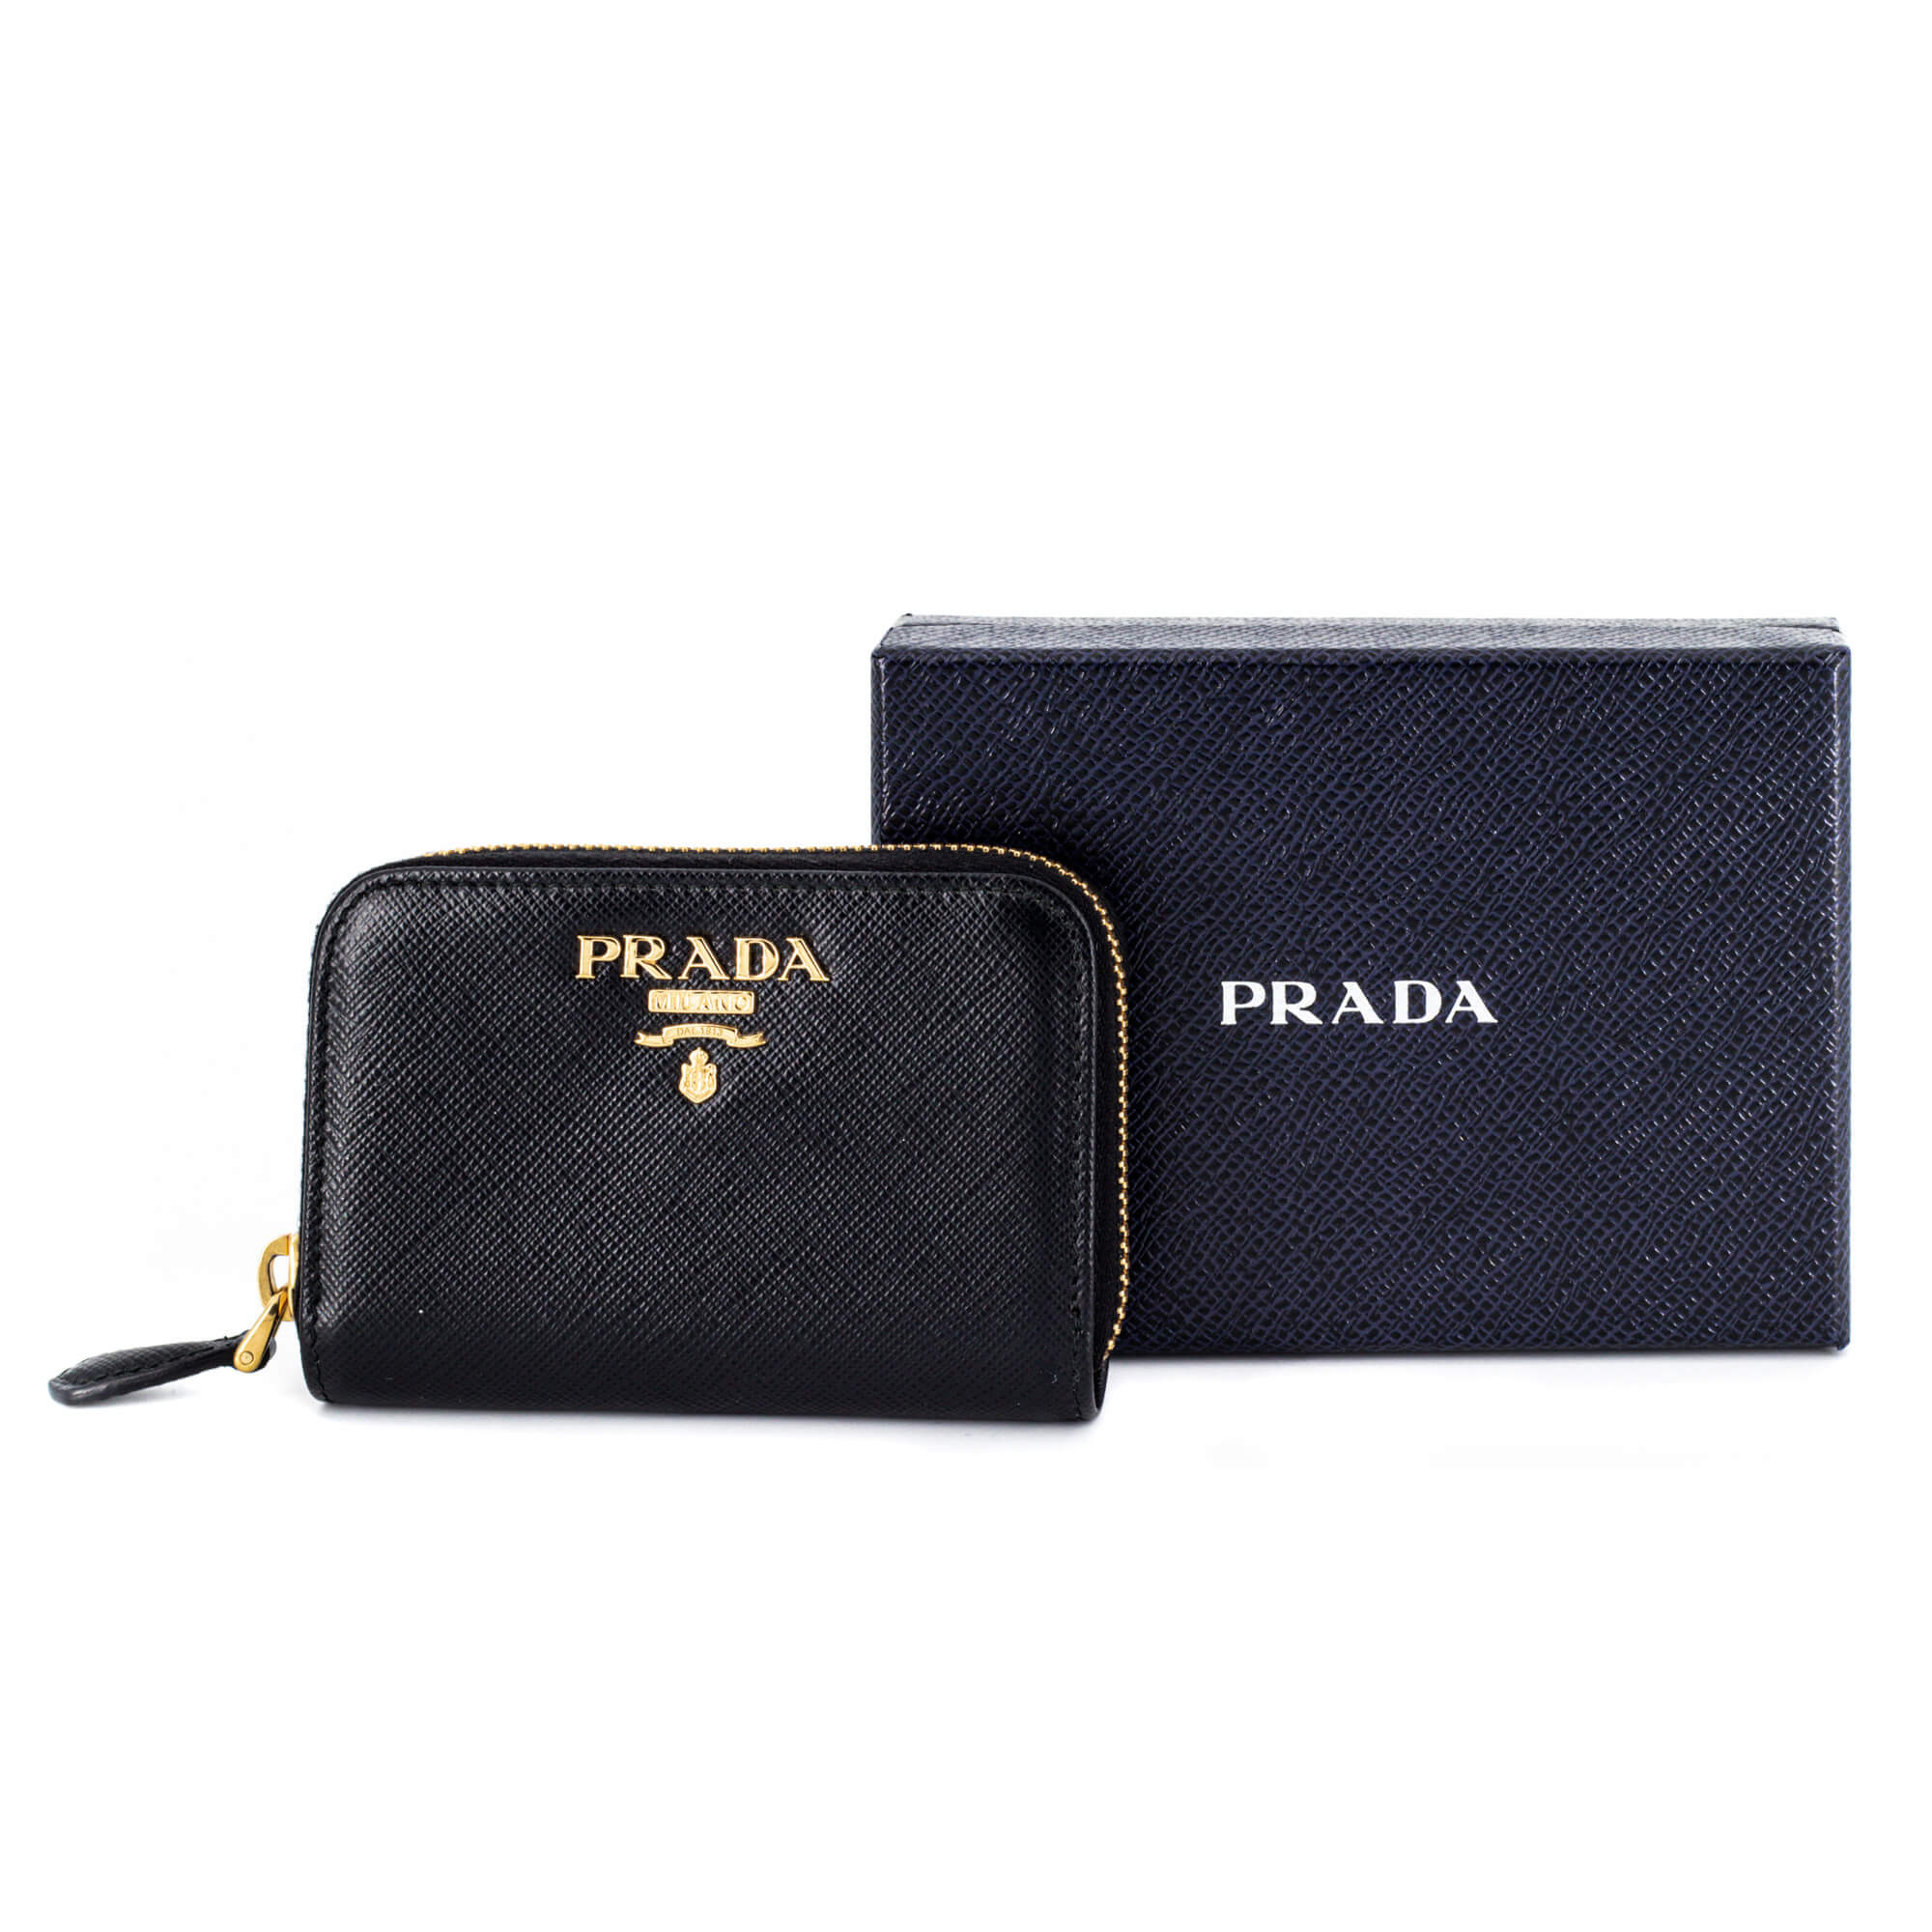 Prada handbag hi-res stock photography and images - Alamy